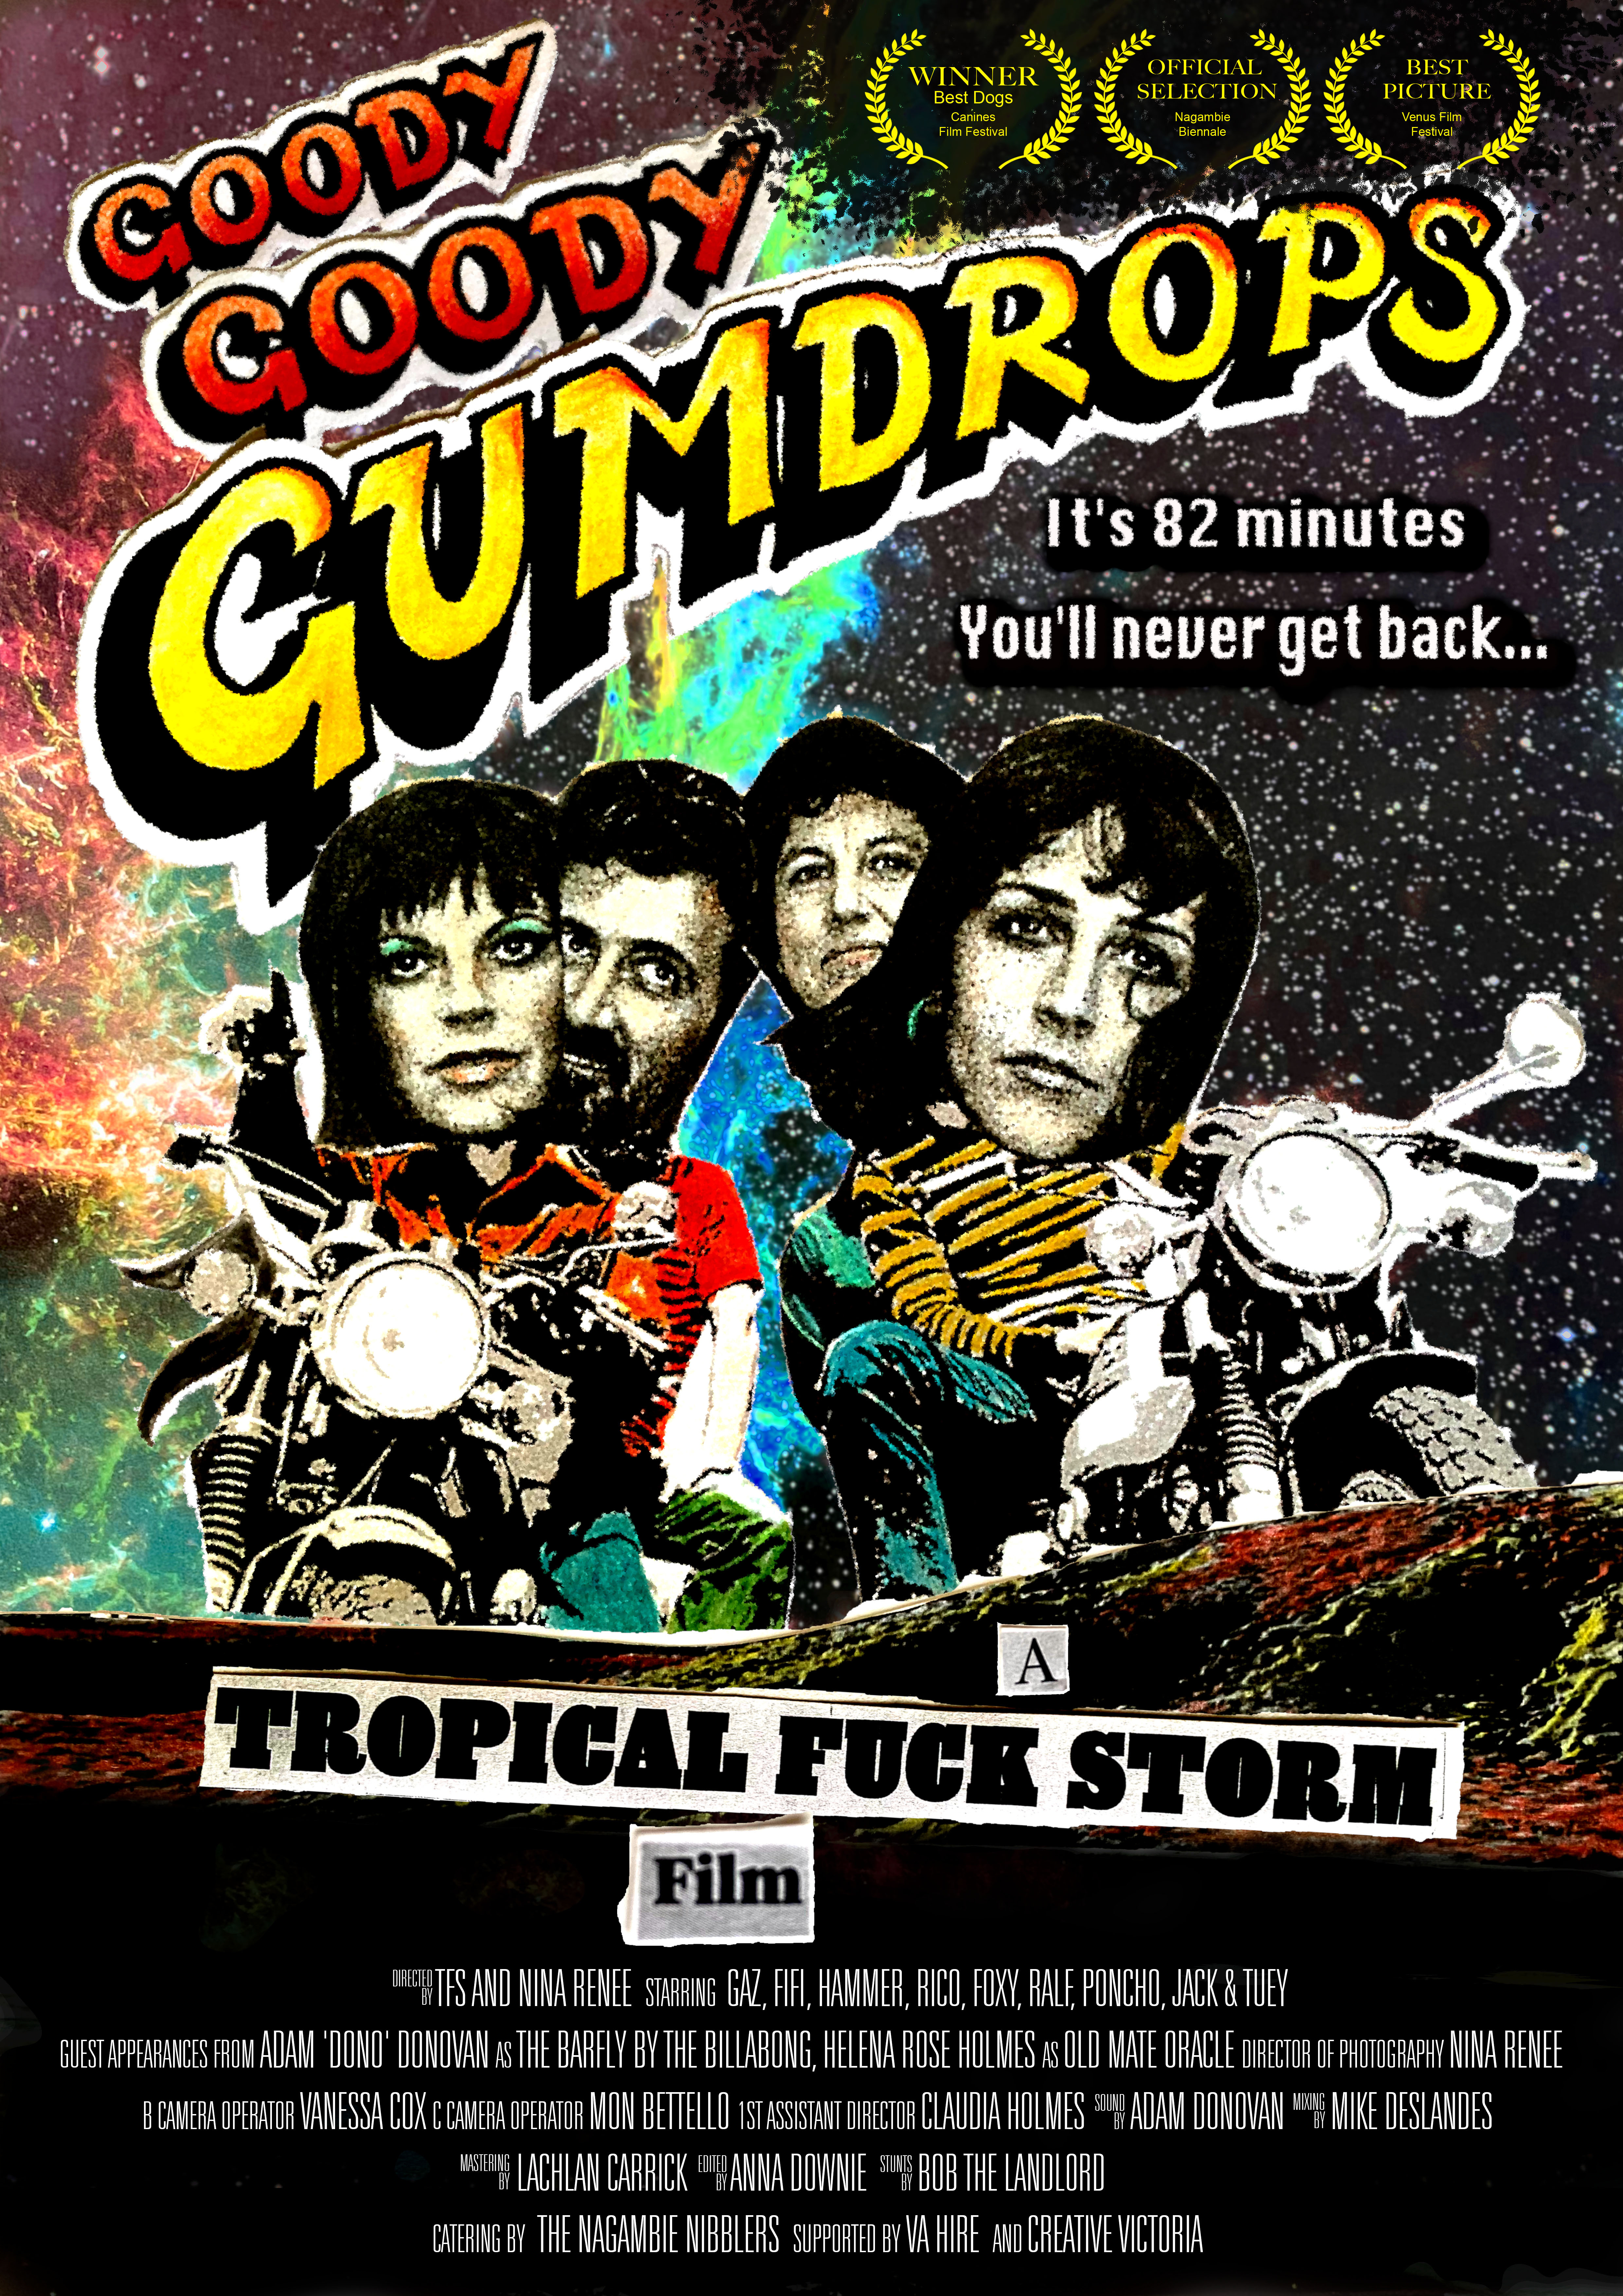 Goody Goody Gumdrops – A Tropical Fuck Storm Film